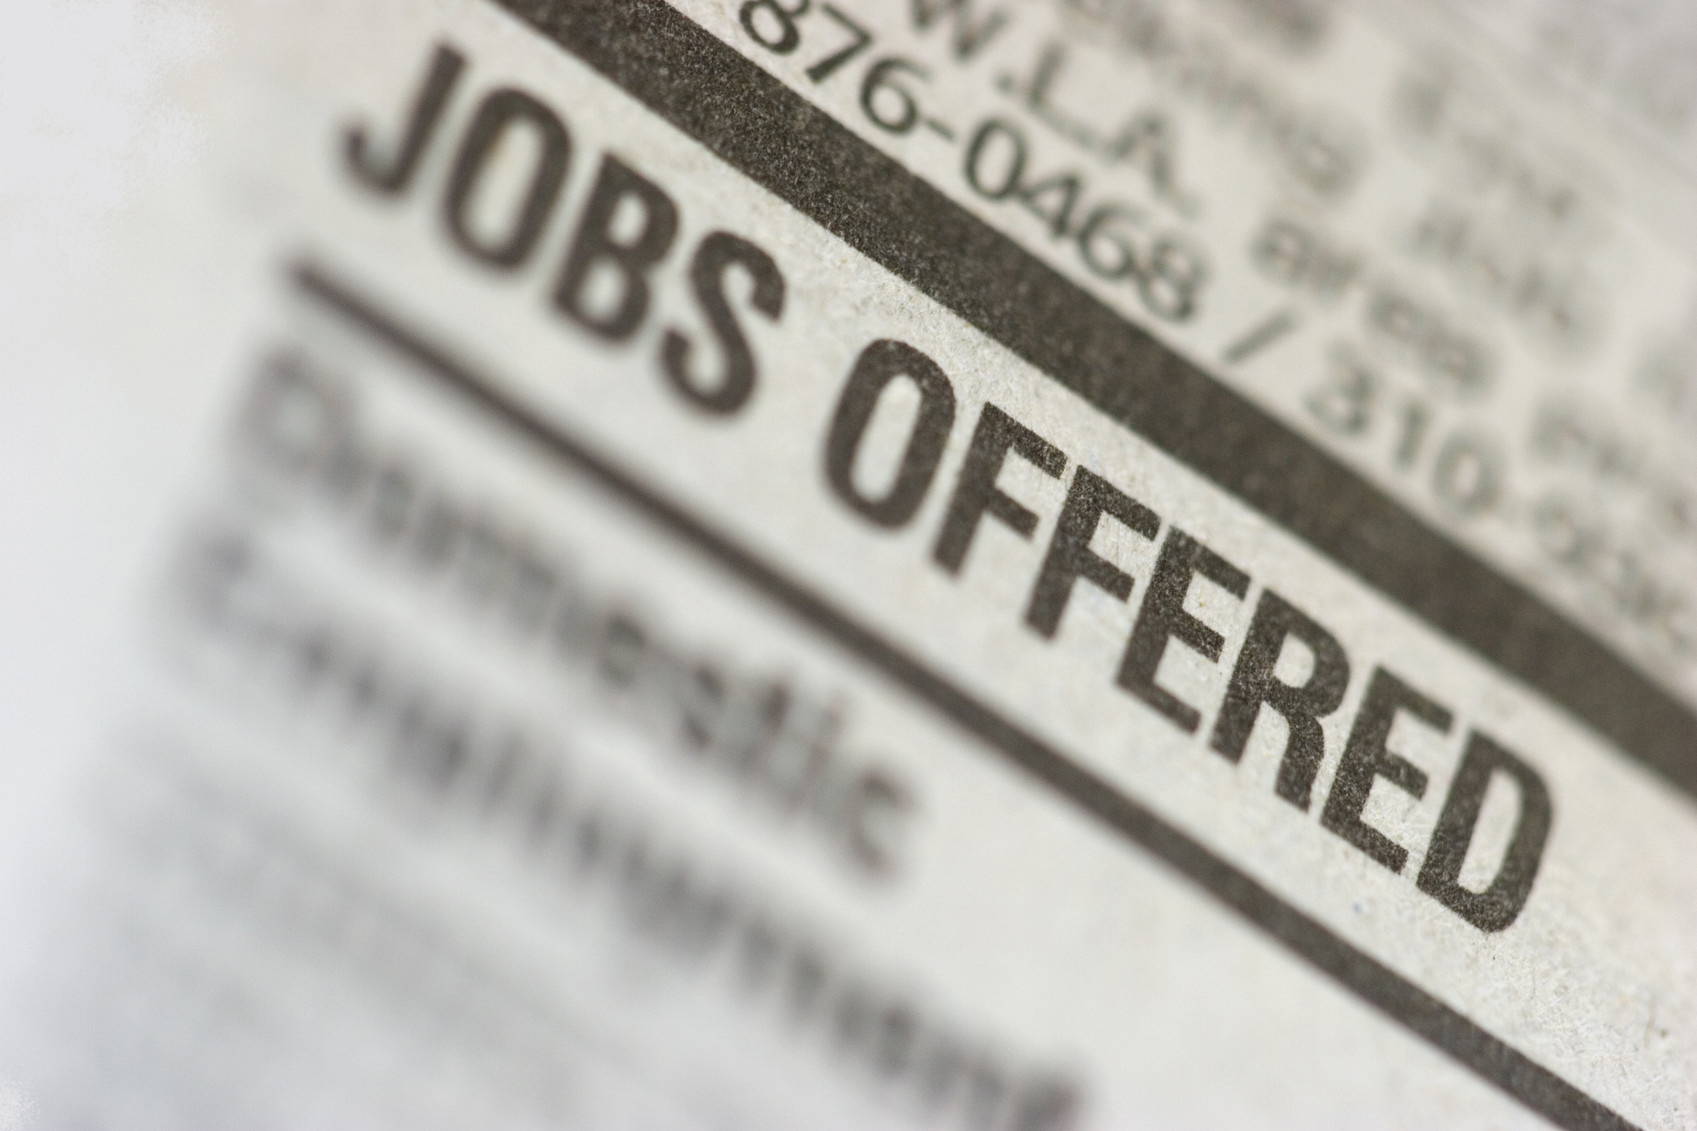 Job offered on newspaper 2